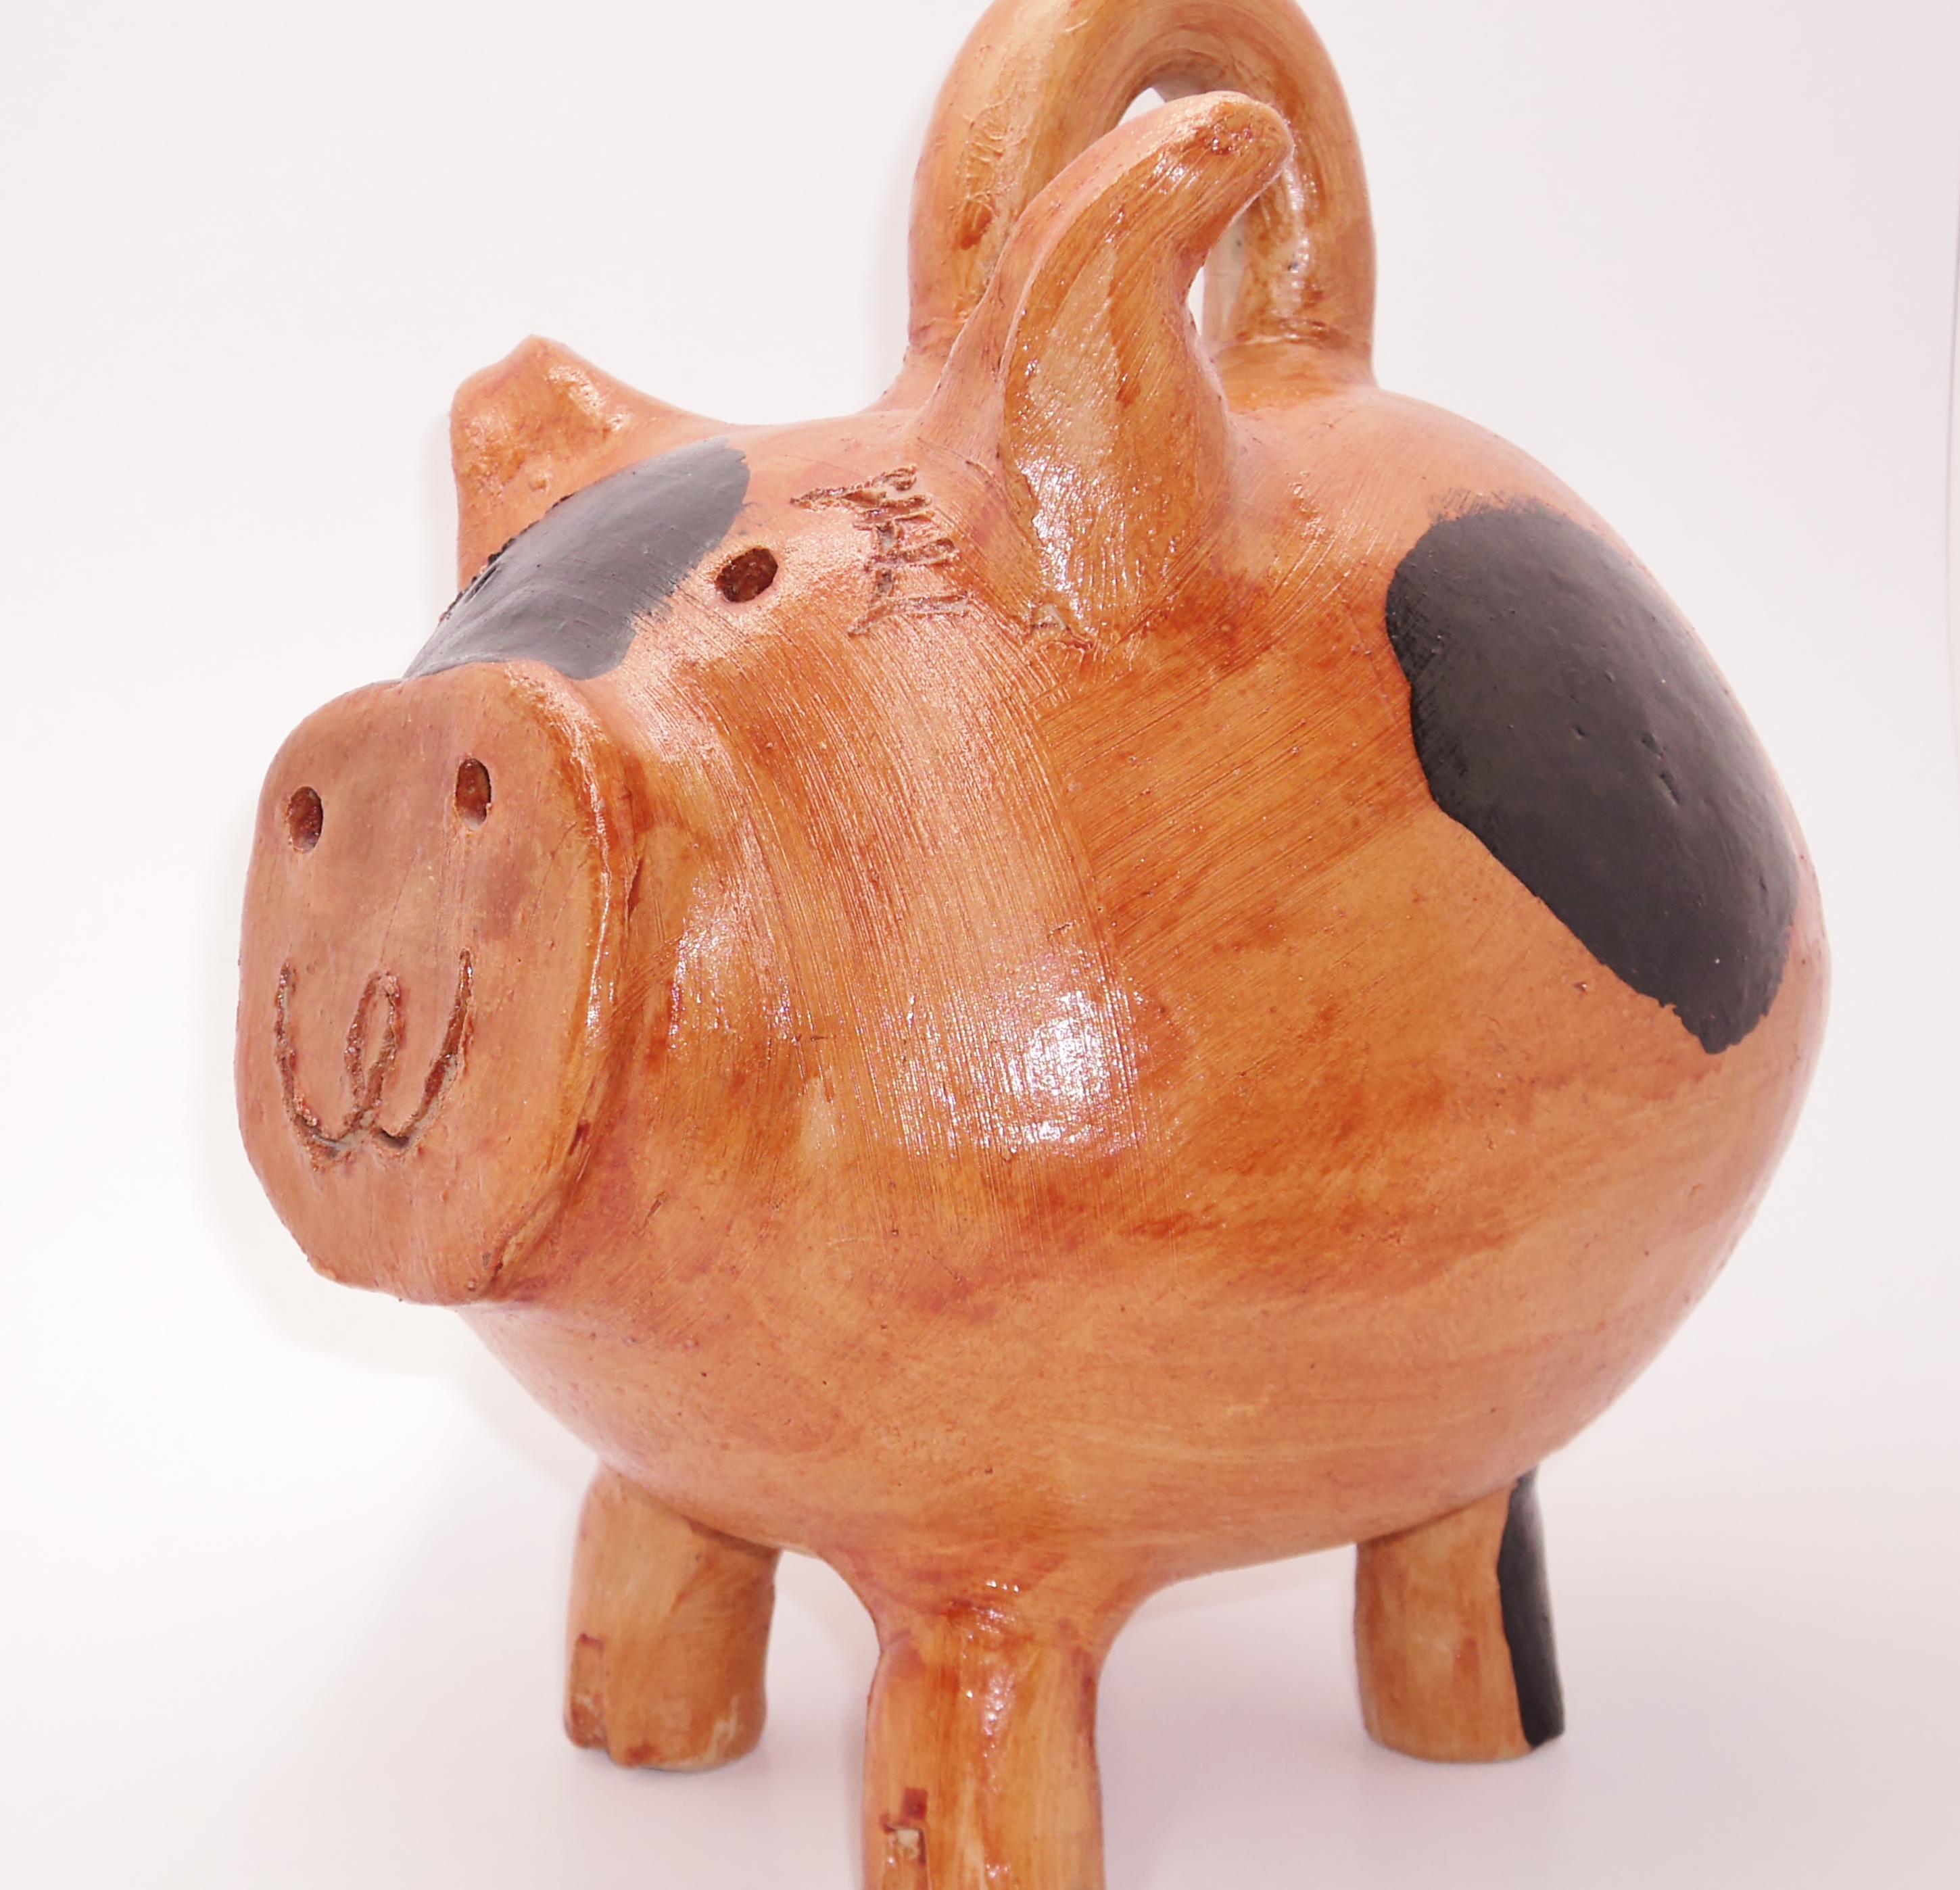 Piggy bank photo